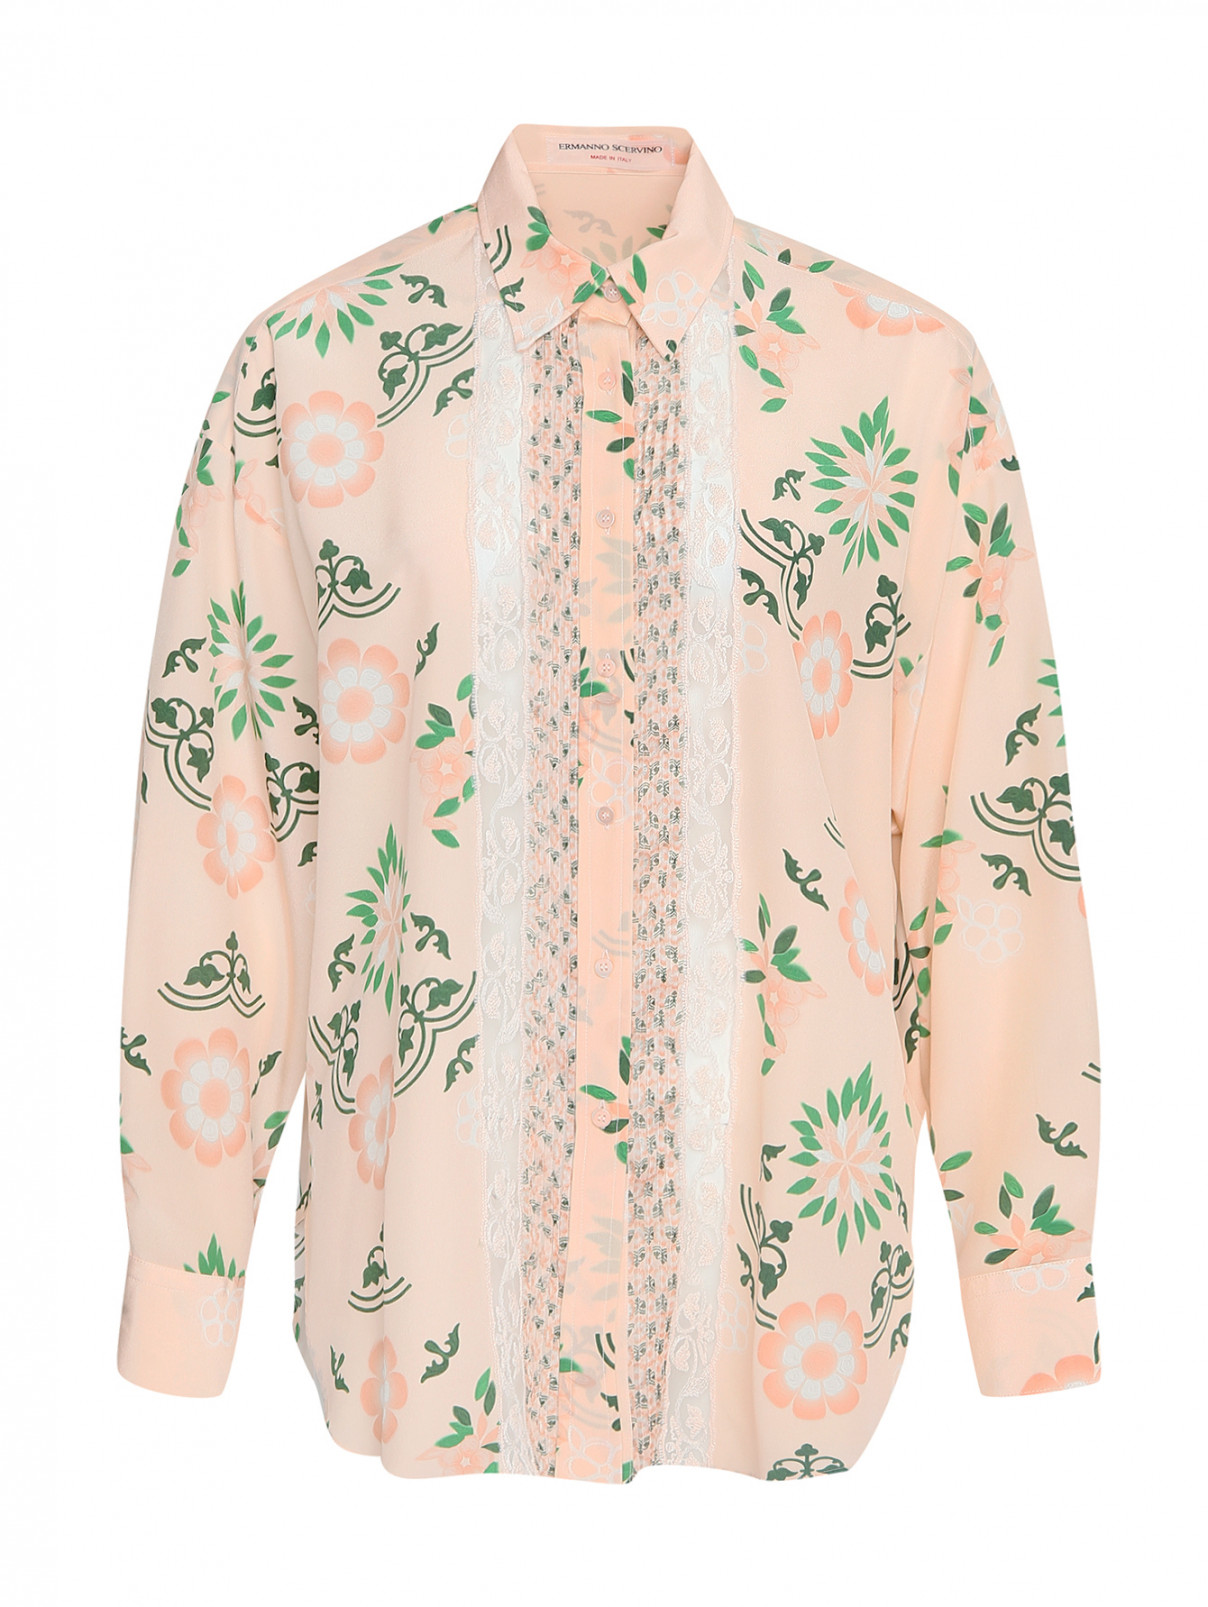 Блуза из шелка с узором Ermanno Scervino  –  Общий вид  – Цвет:  Узор